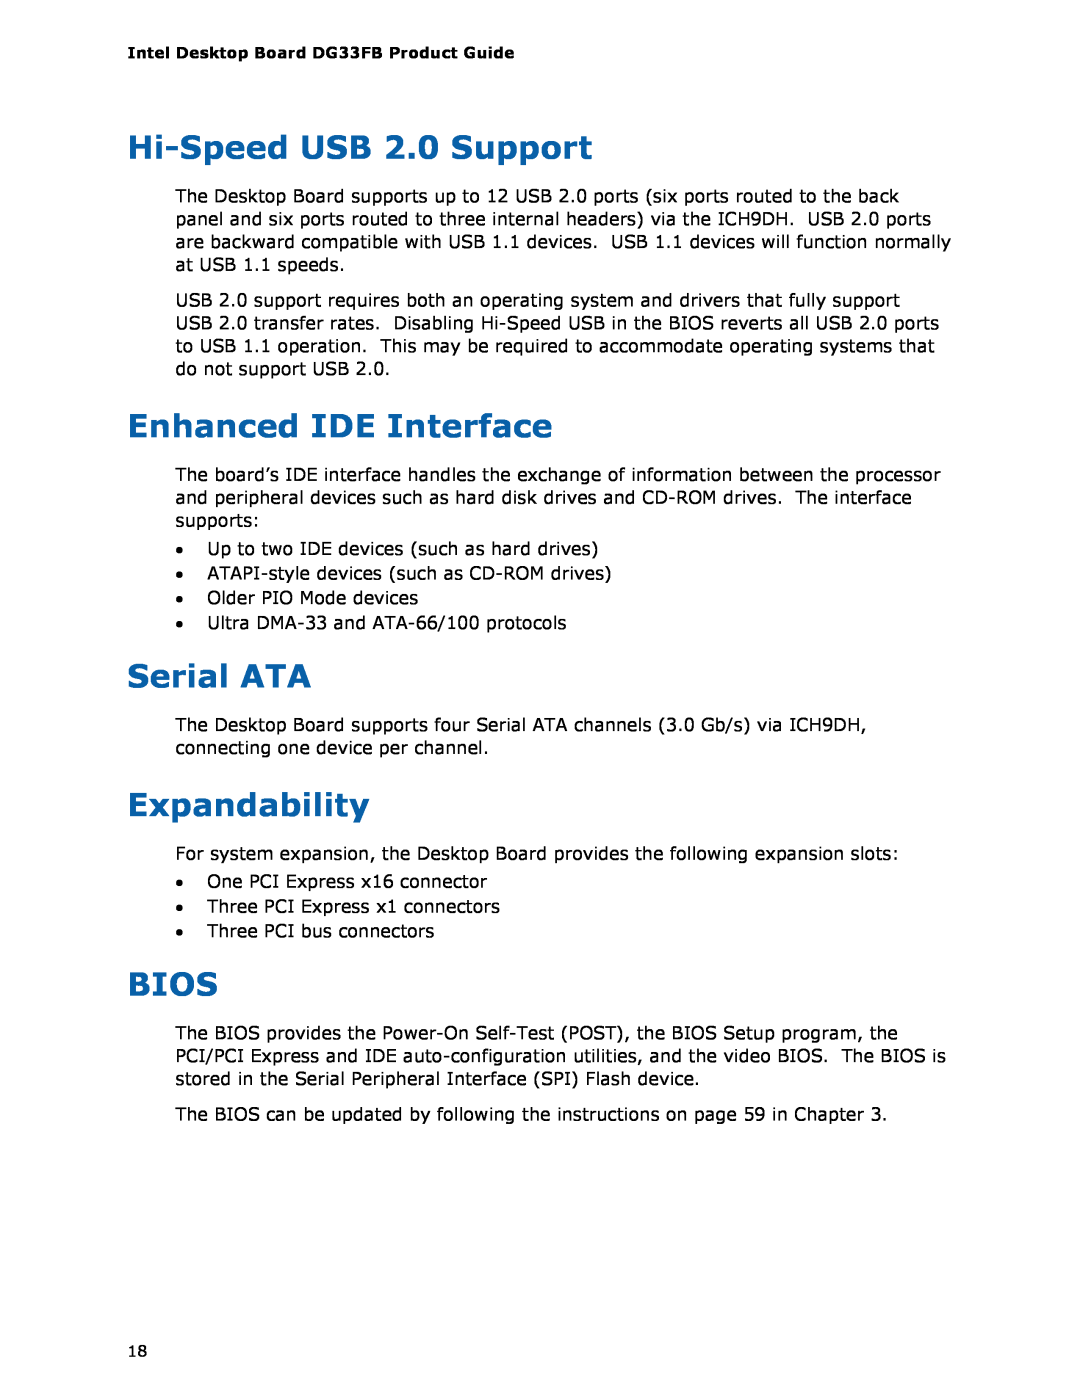 Intel DG33FB manual Hi-SpeedUSB 2.0 Support, Enhanced IDE Interface, Serial ATA, Expandability, Bios 